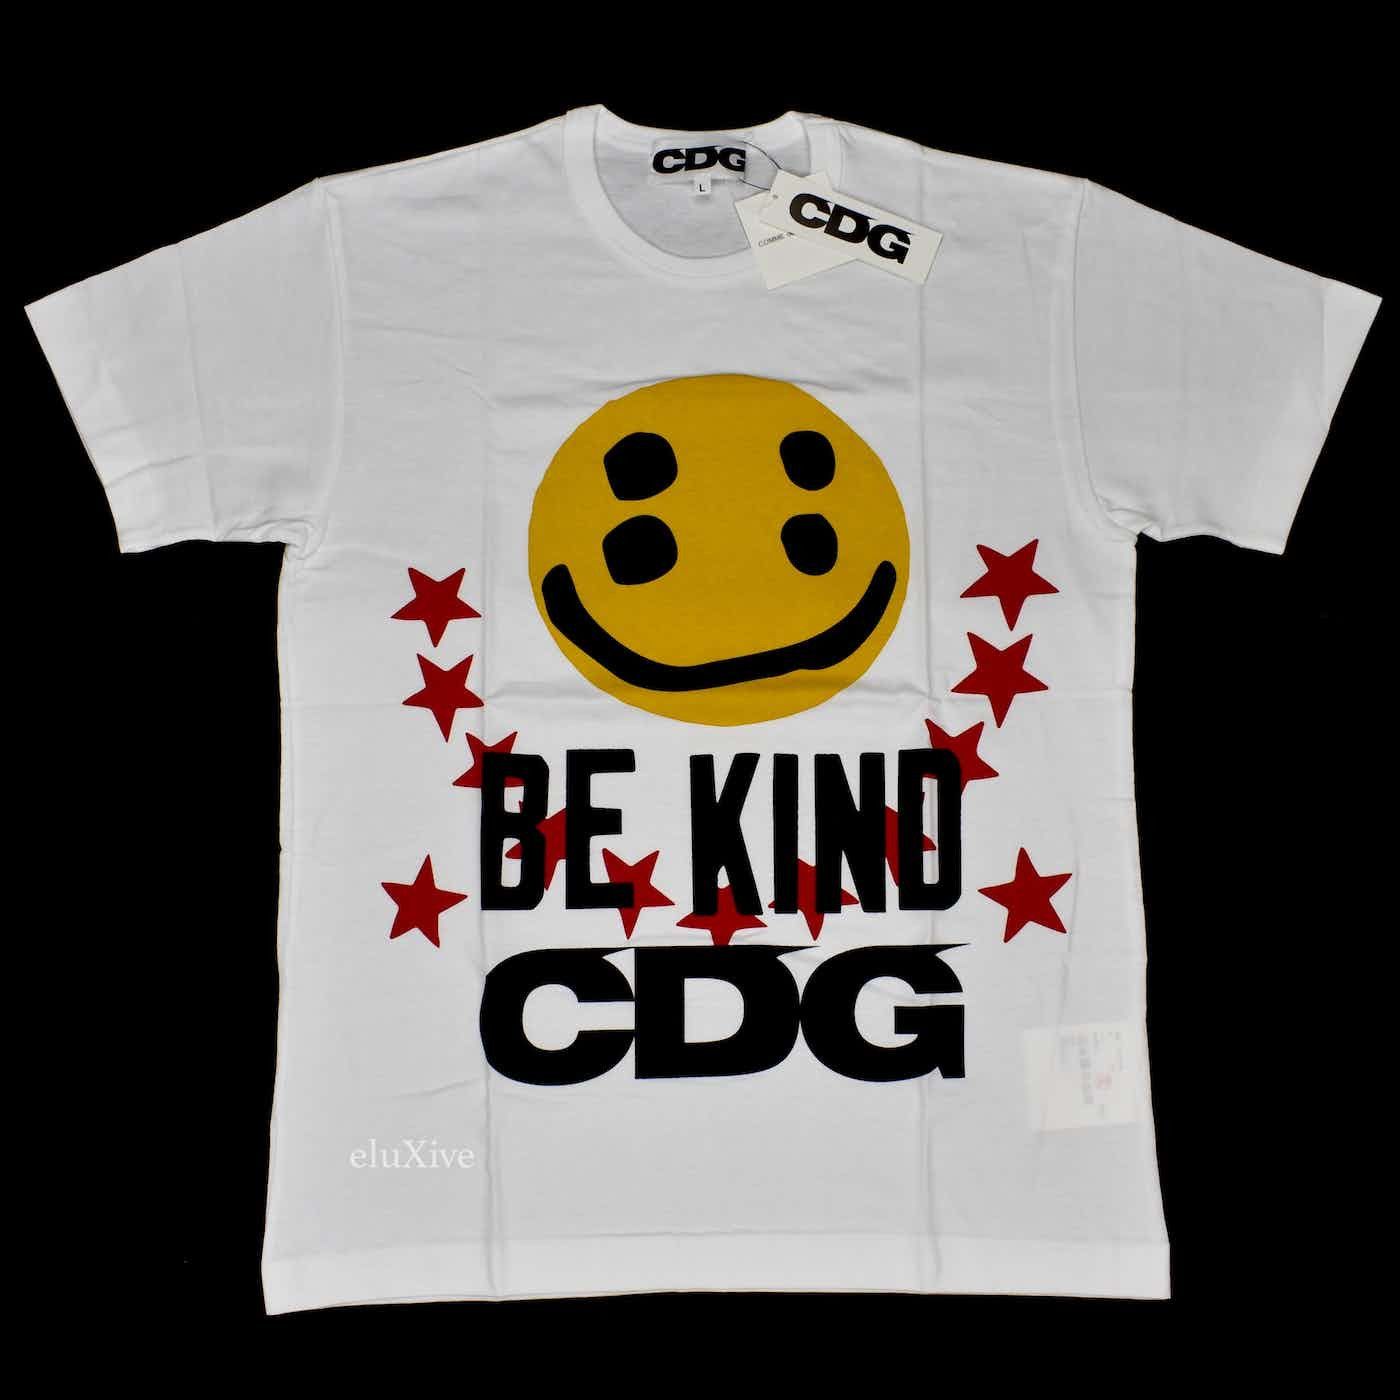 Comme des Garcons CPFM CDG Double Vision Smiley Face T-Shirt DS | Grailed